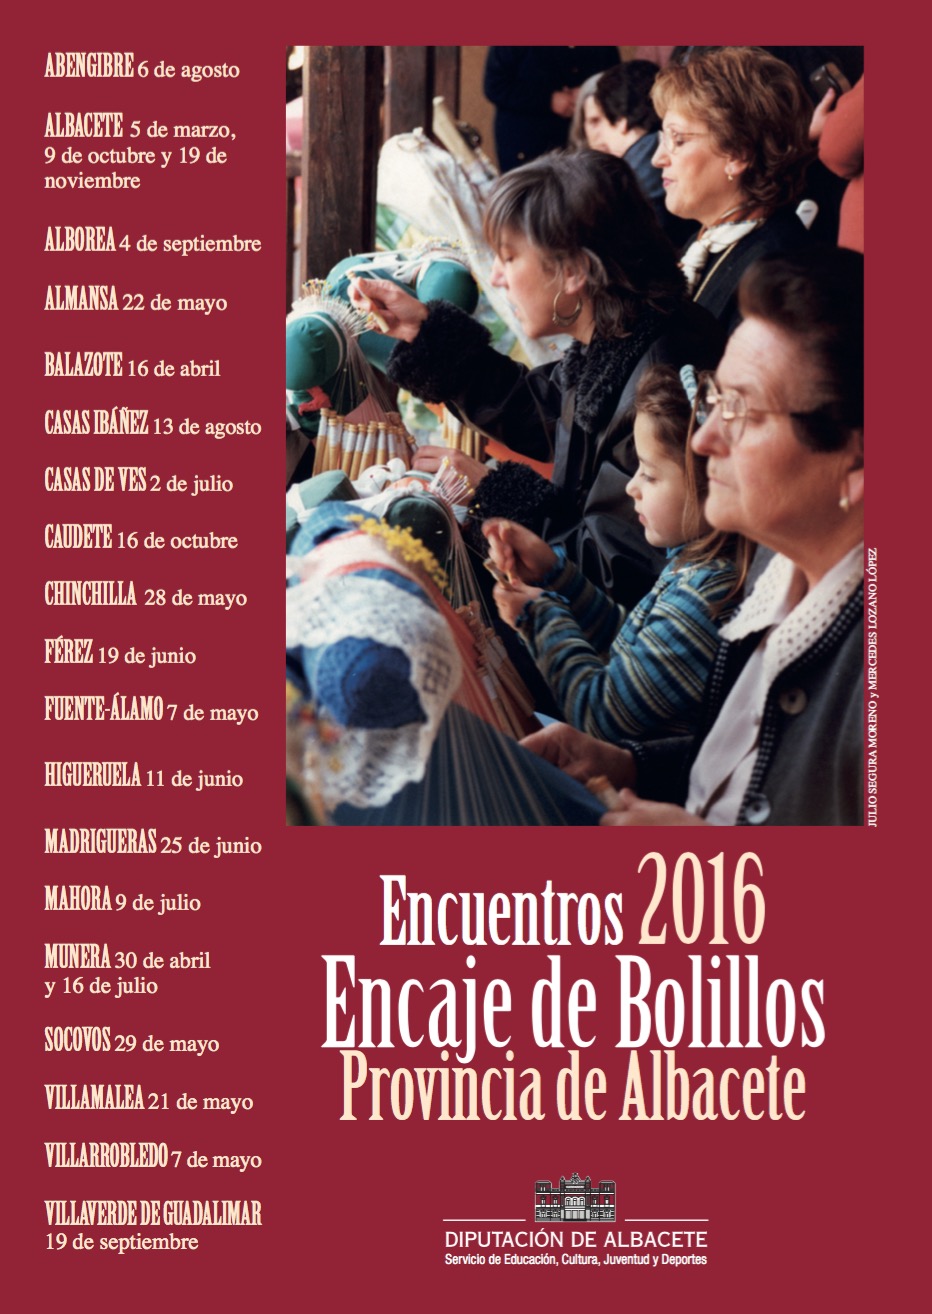 Encuentro de Bolillos 2016